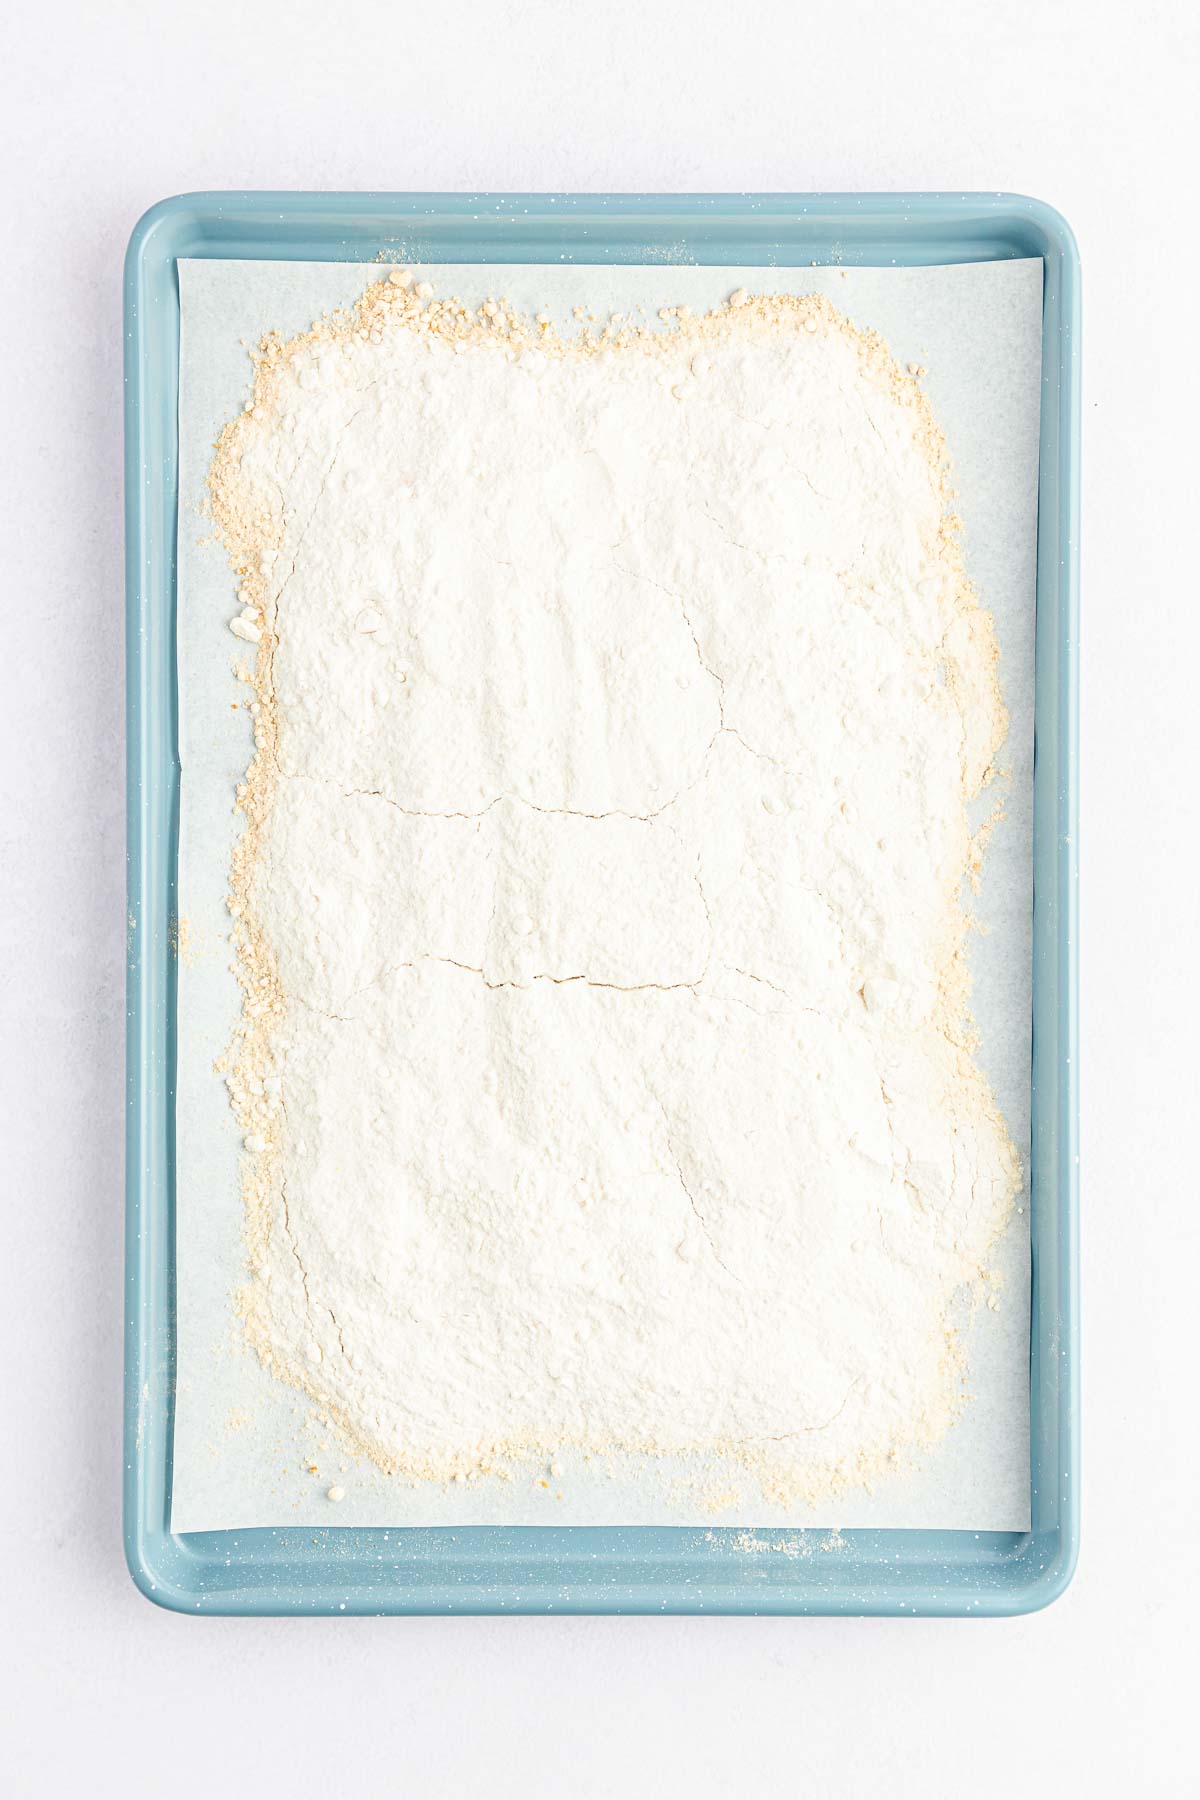 white cake mix on a baking sheet